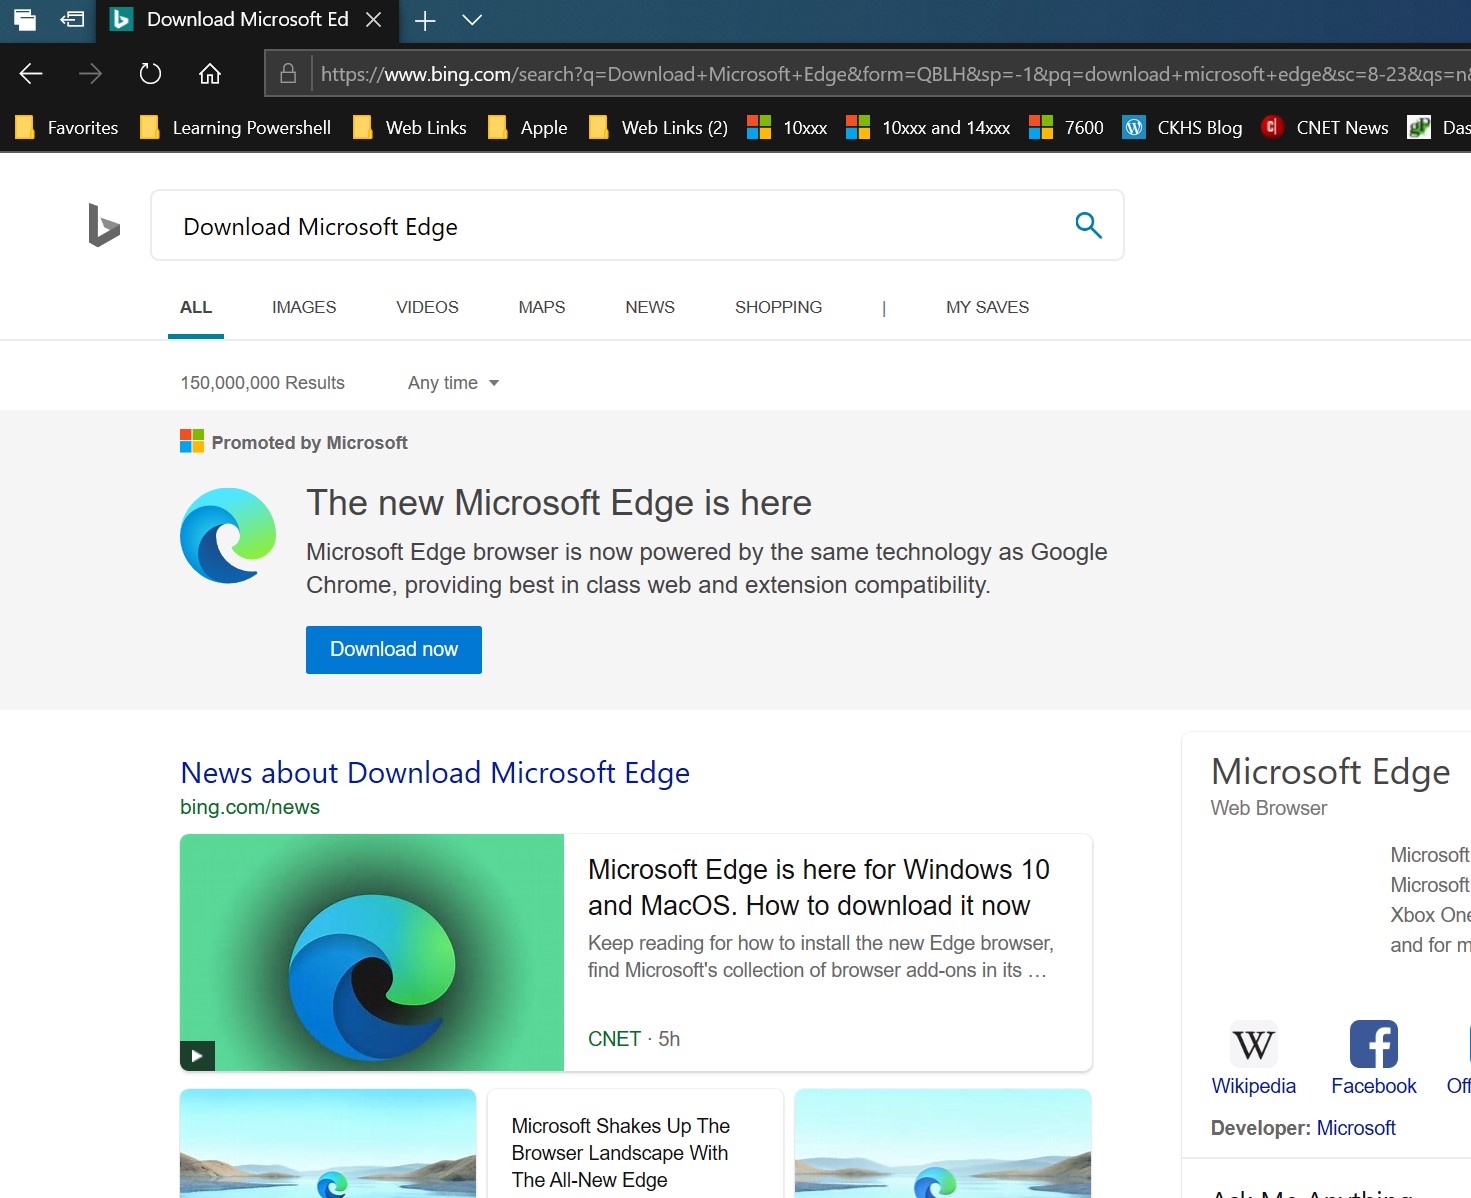 Microsoft Edge – All the news from Build 2019 - Microsoft Edge Blog